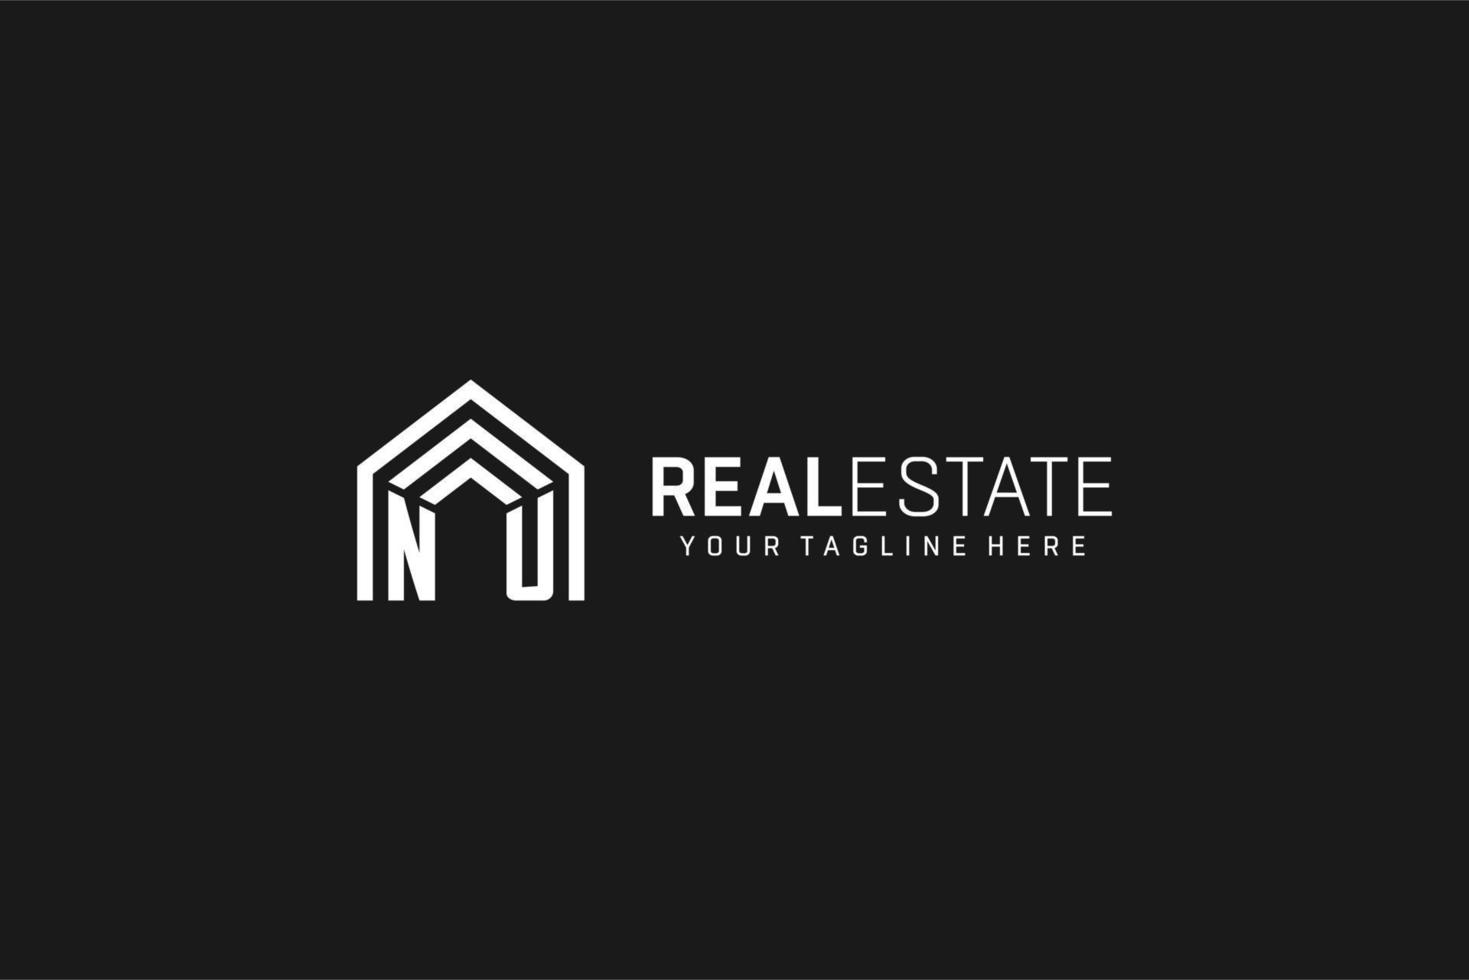 Letter NU house roof shape logo, creative real estate monogram logo style vector